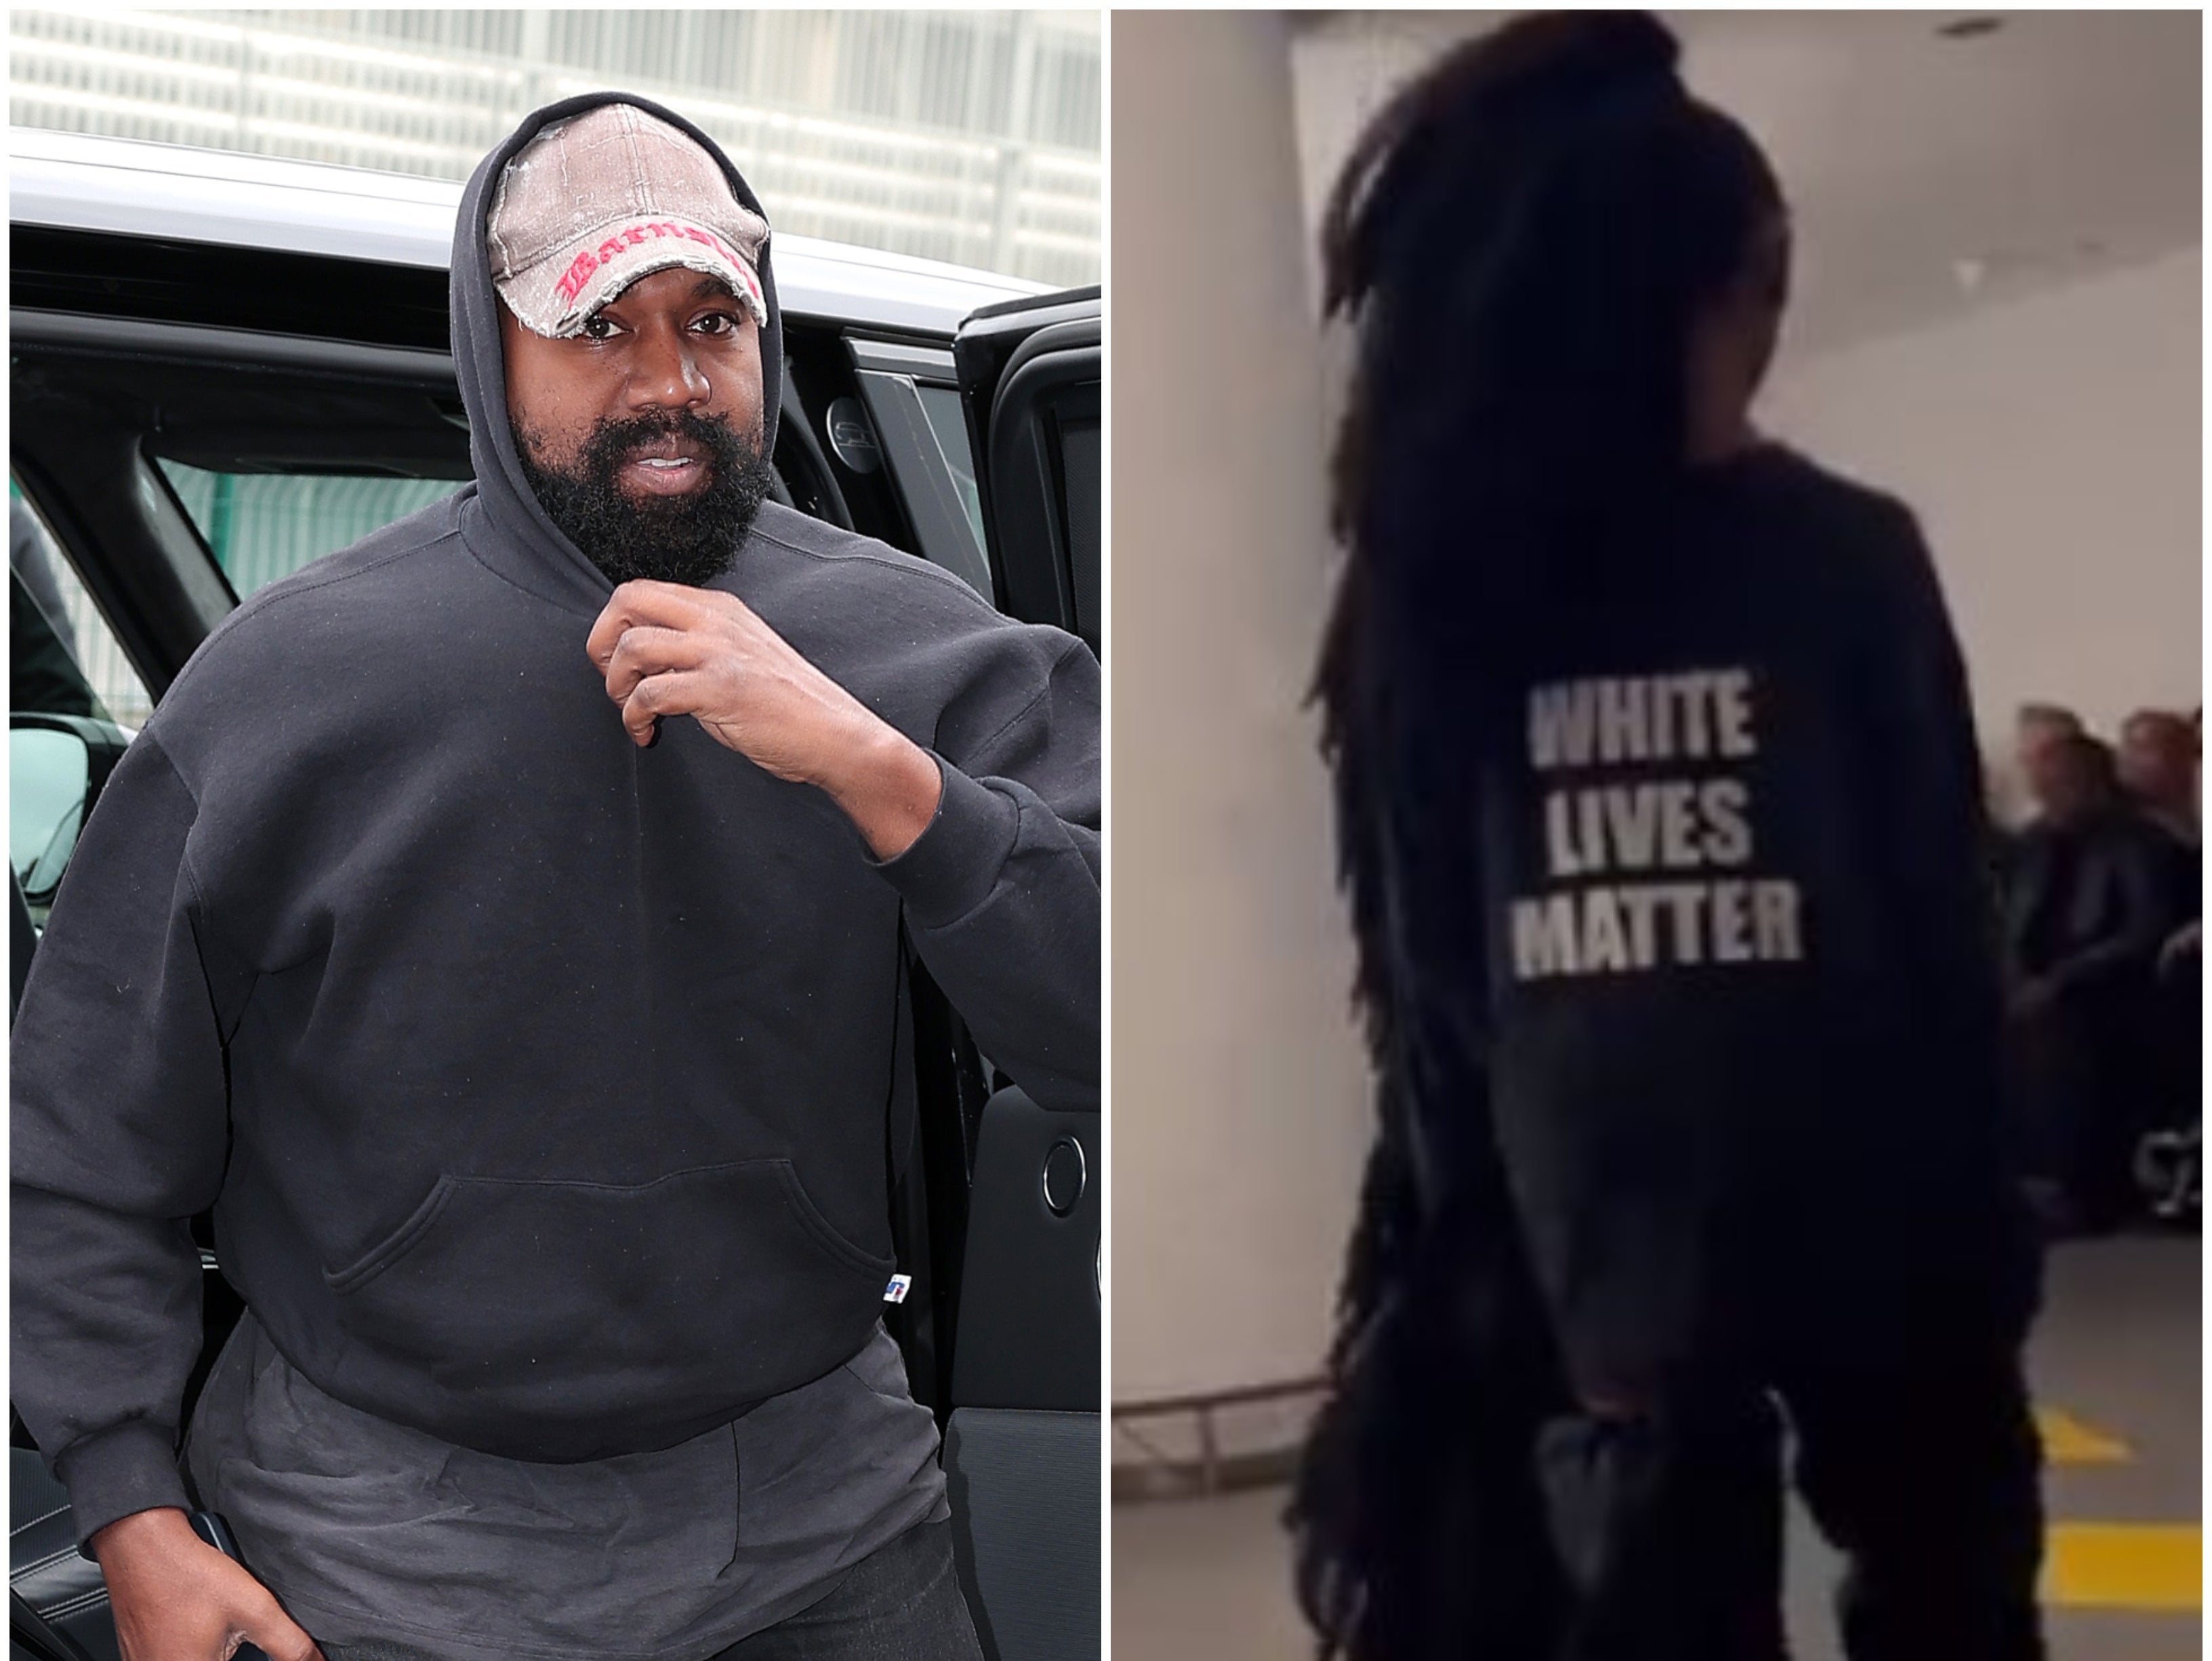 Kanye West responde a las críticas por sus camisas que dicen “White Lives Matter”